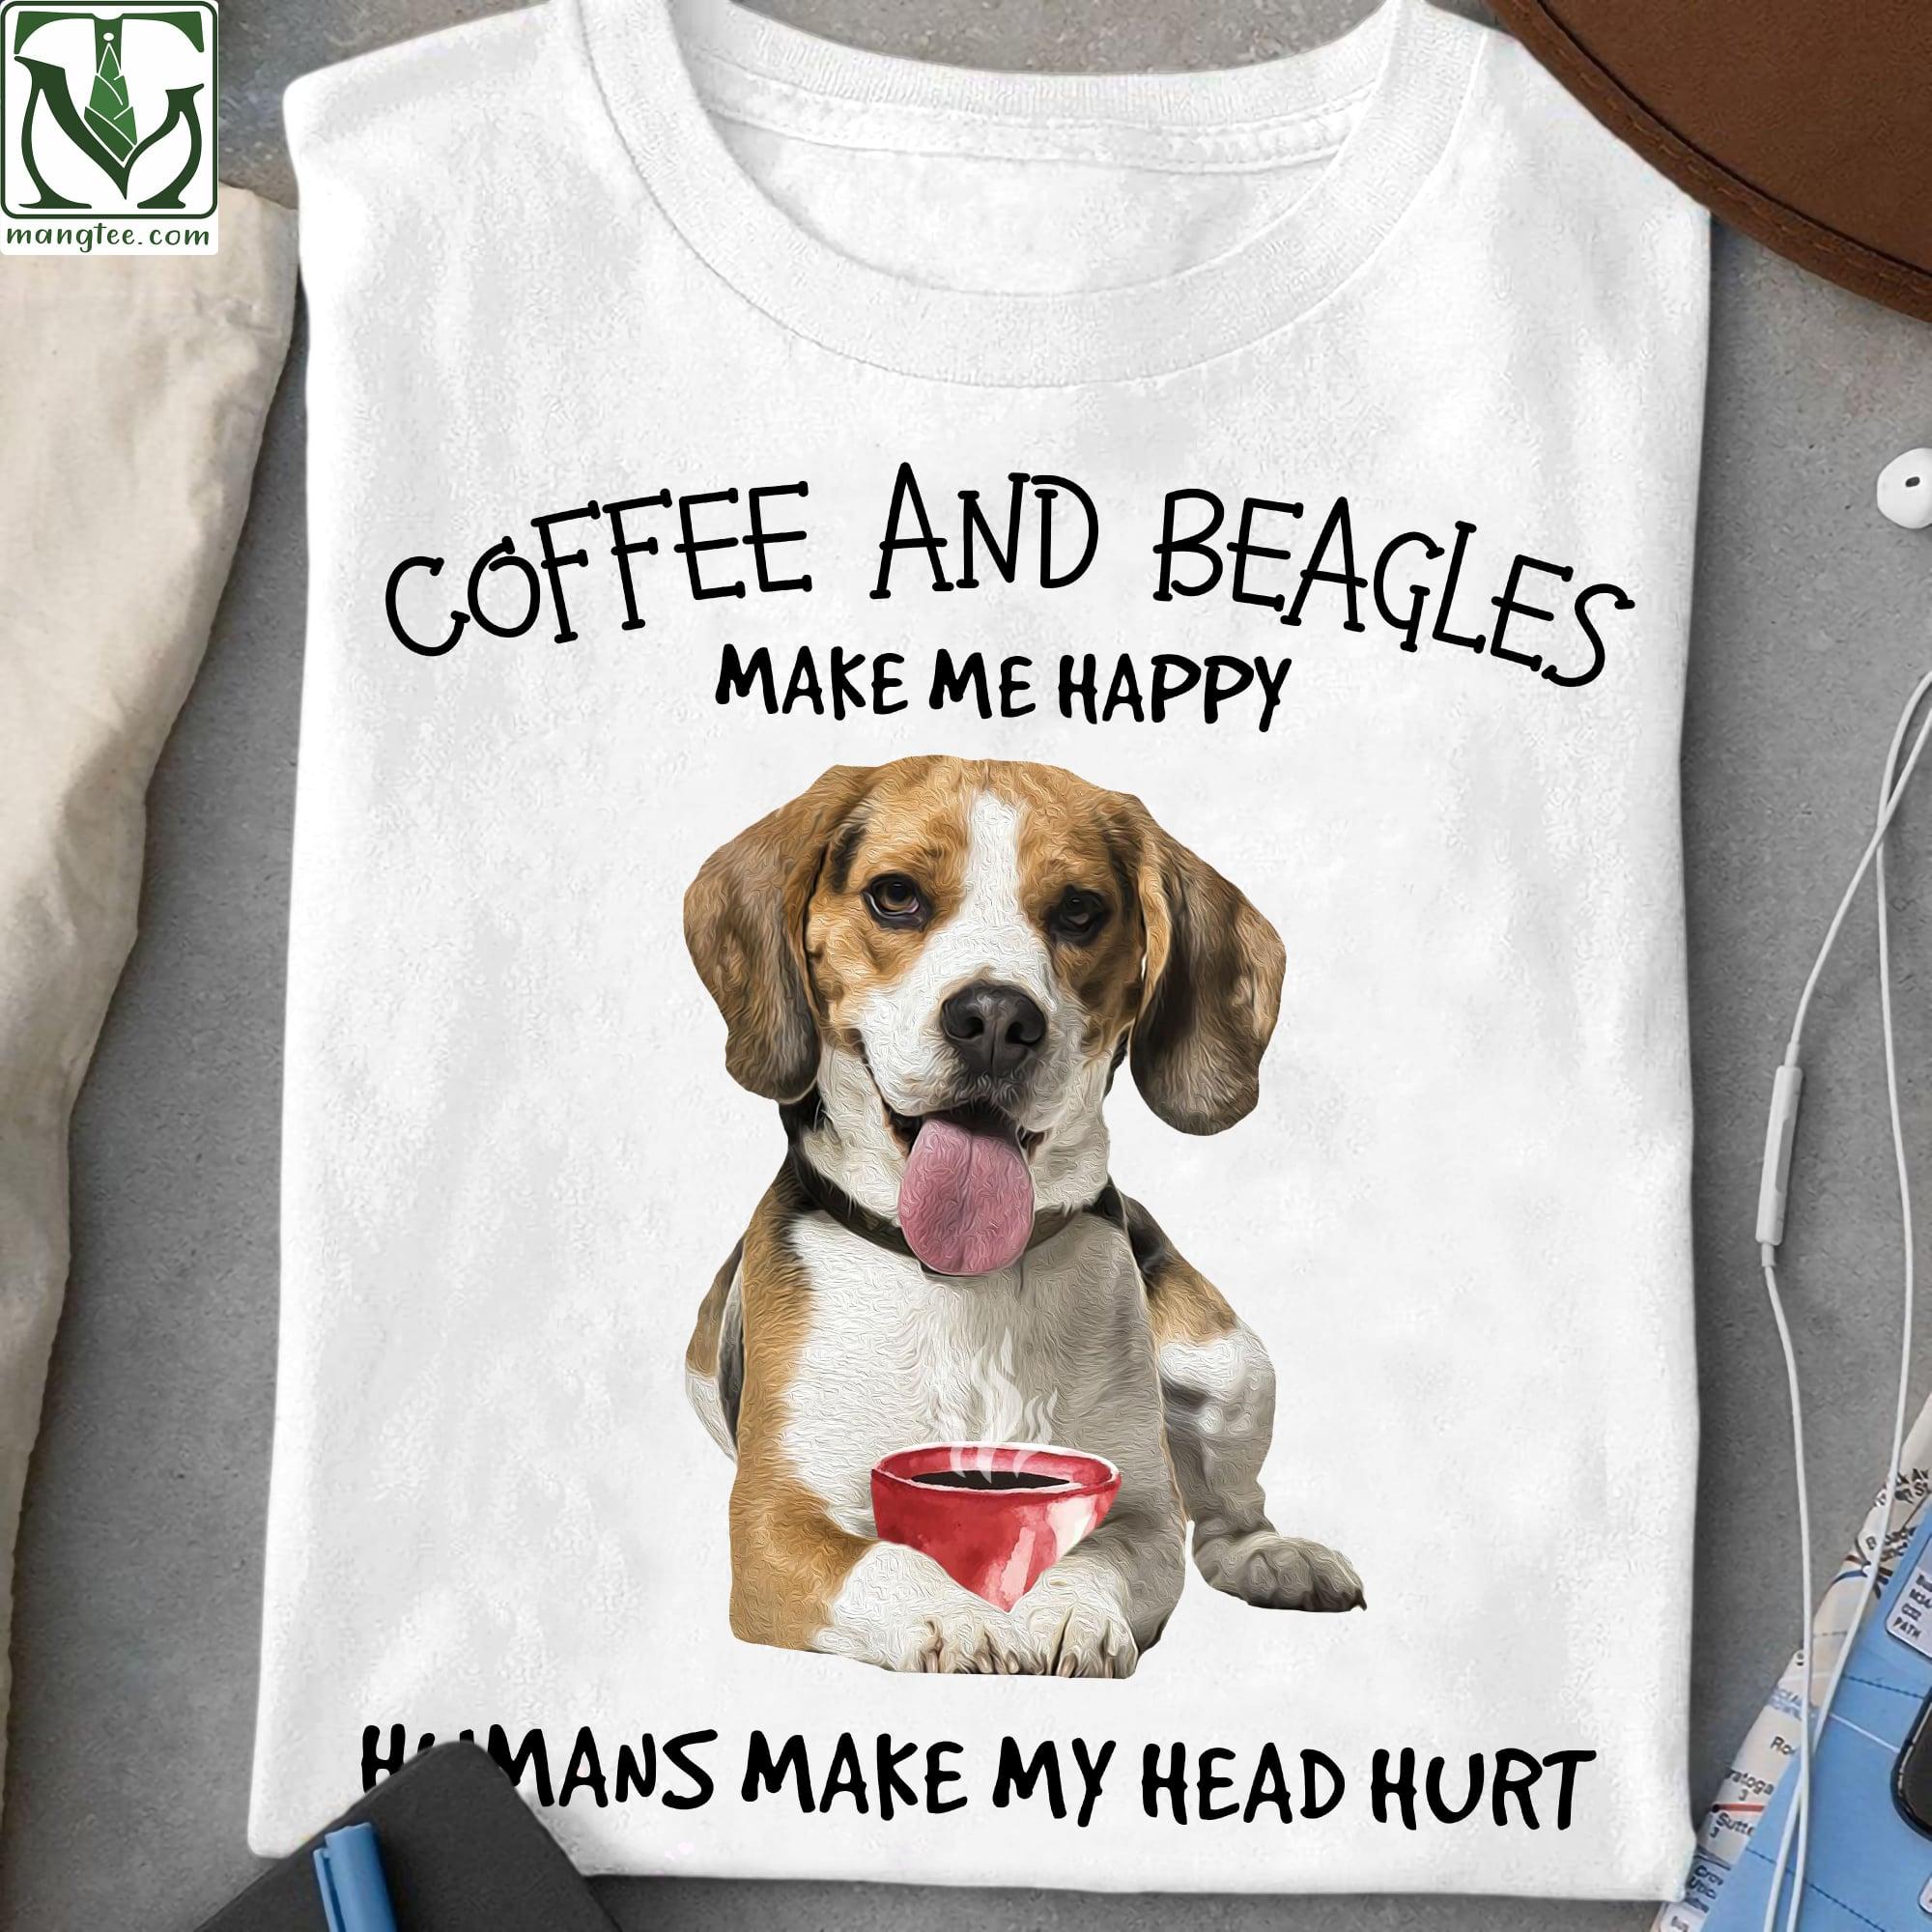 Coffee and Beagle make me happy, humans make my head hurt - Dog and coffee, Beagle dog lover